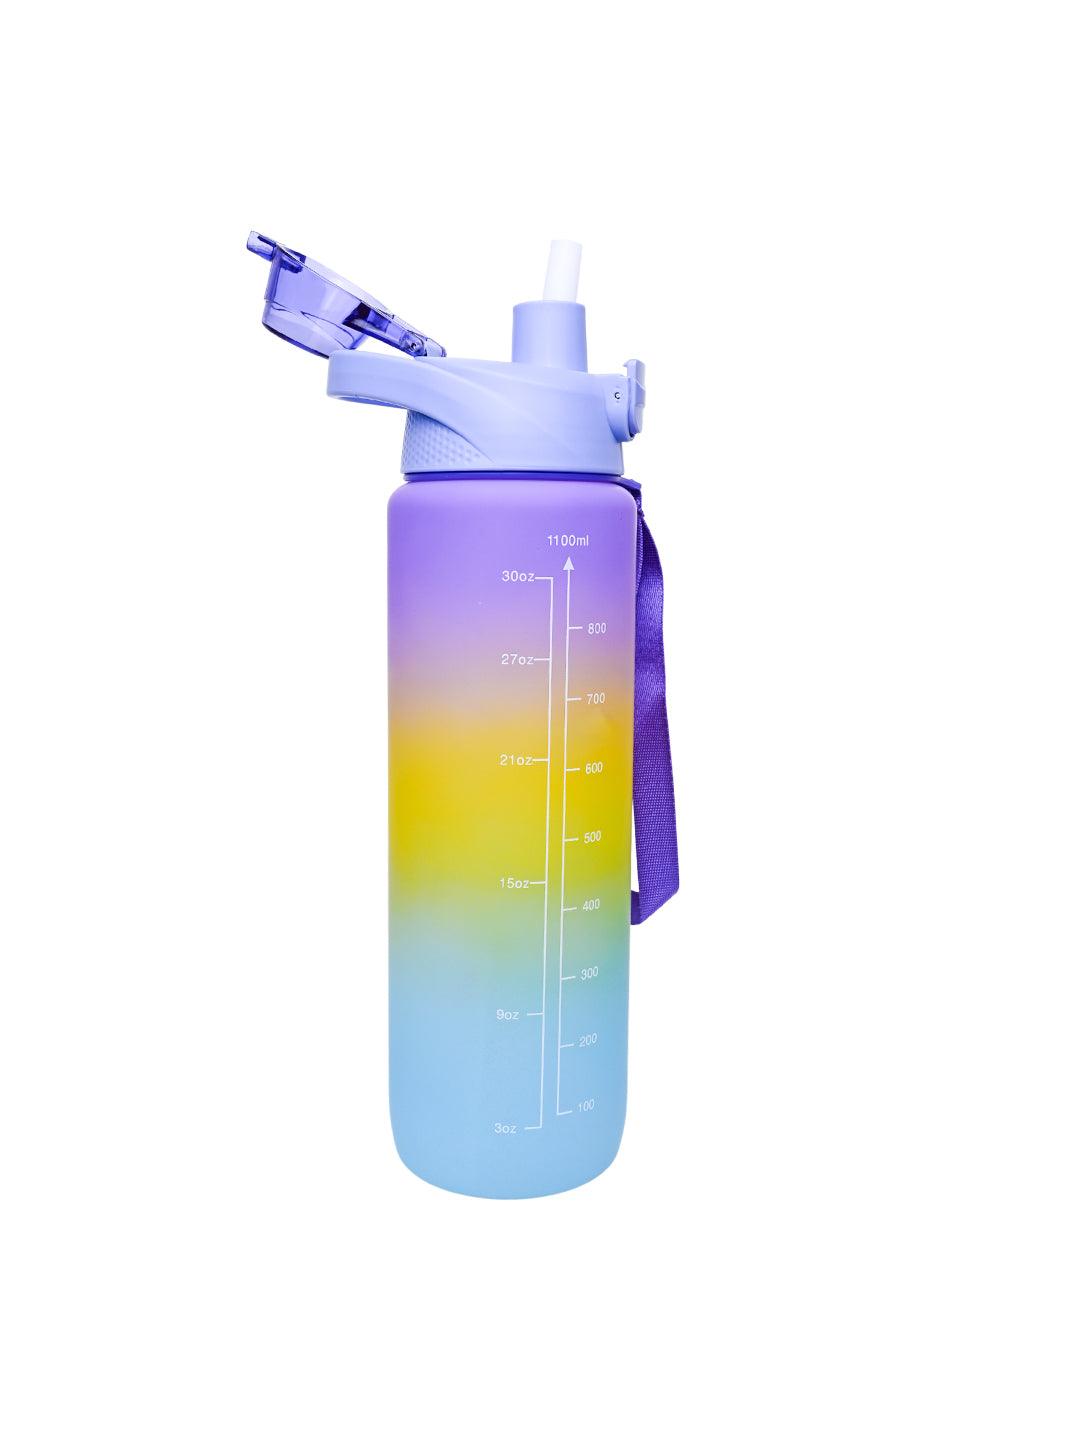 Motivational Sipper Travel Water Bottle, Purple-Yellow-Blue, 1 Liter - MARKET 99